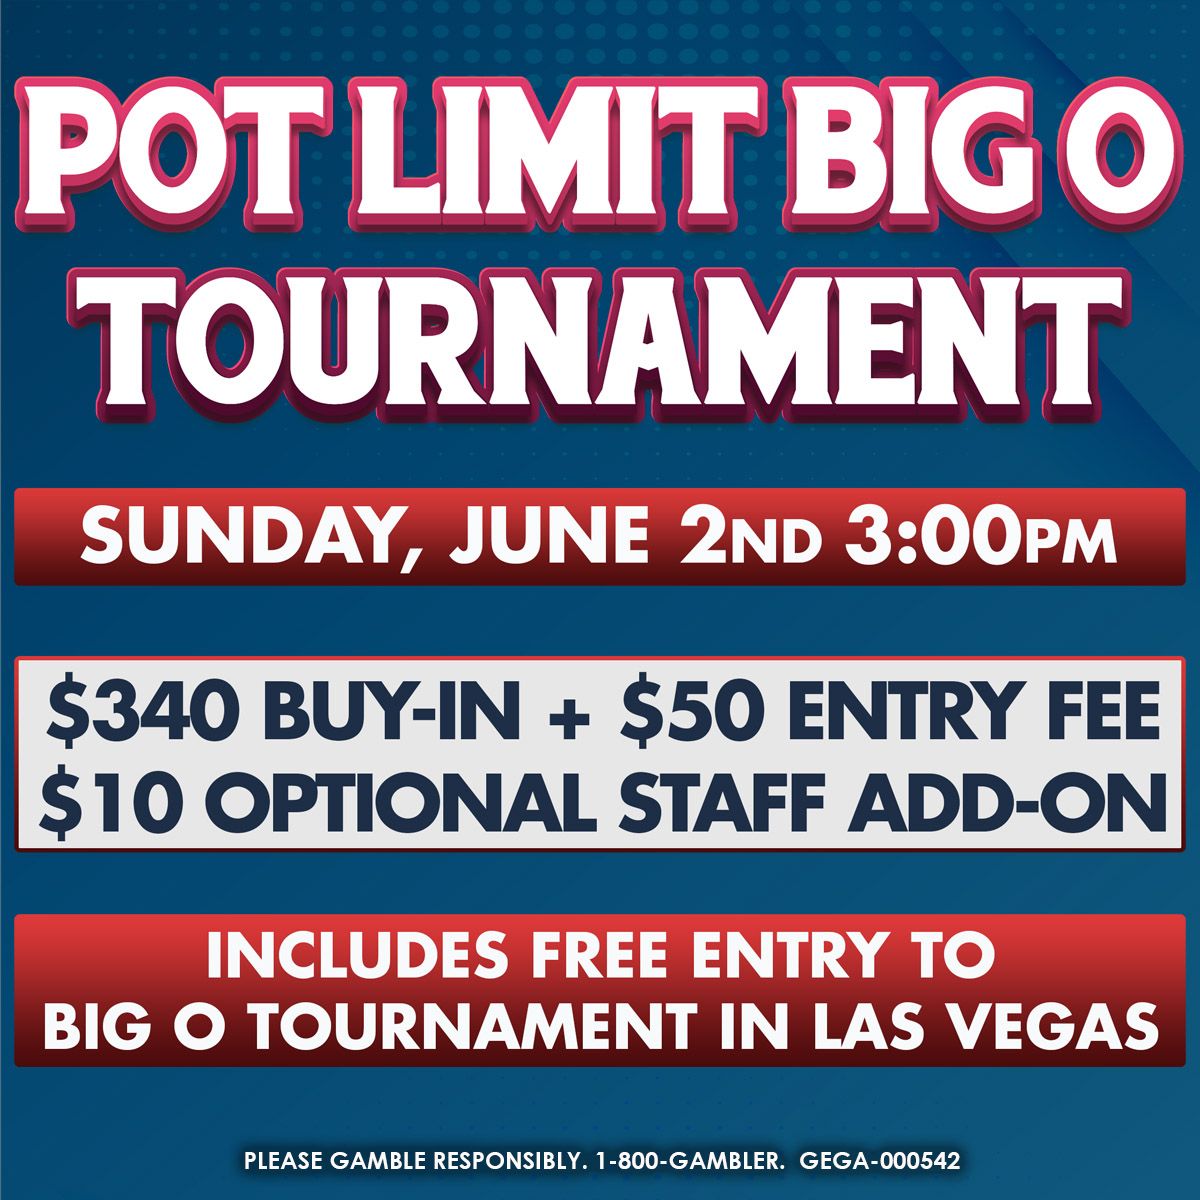 POT Limit Omaha Tournament Flyer- june 2nd tournament